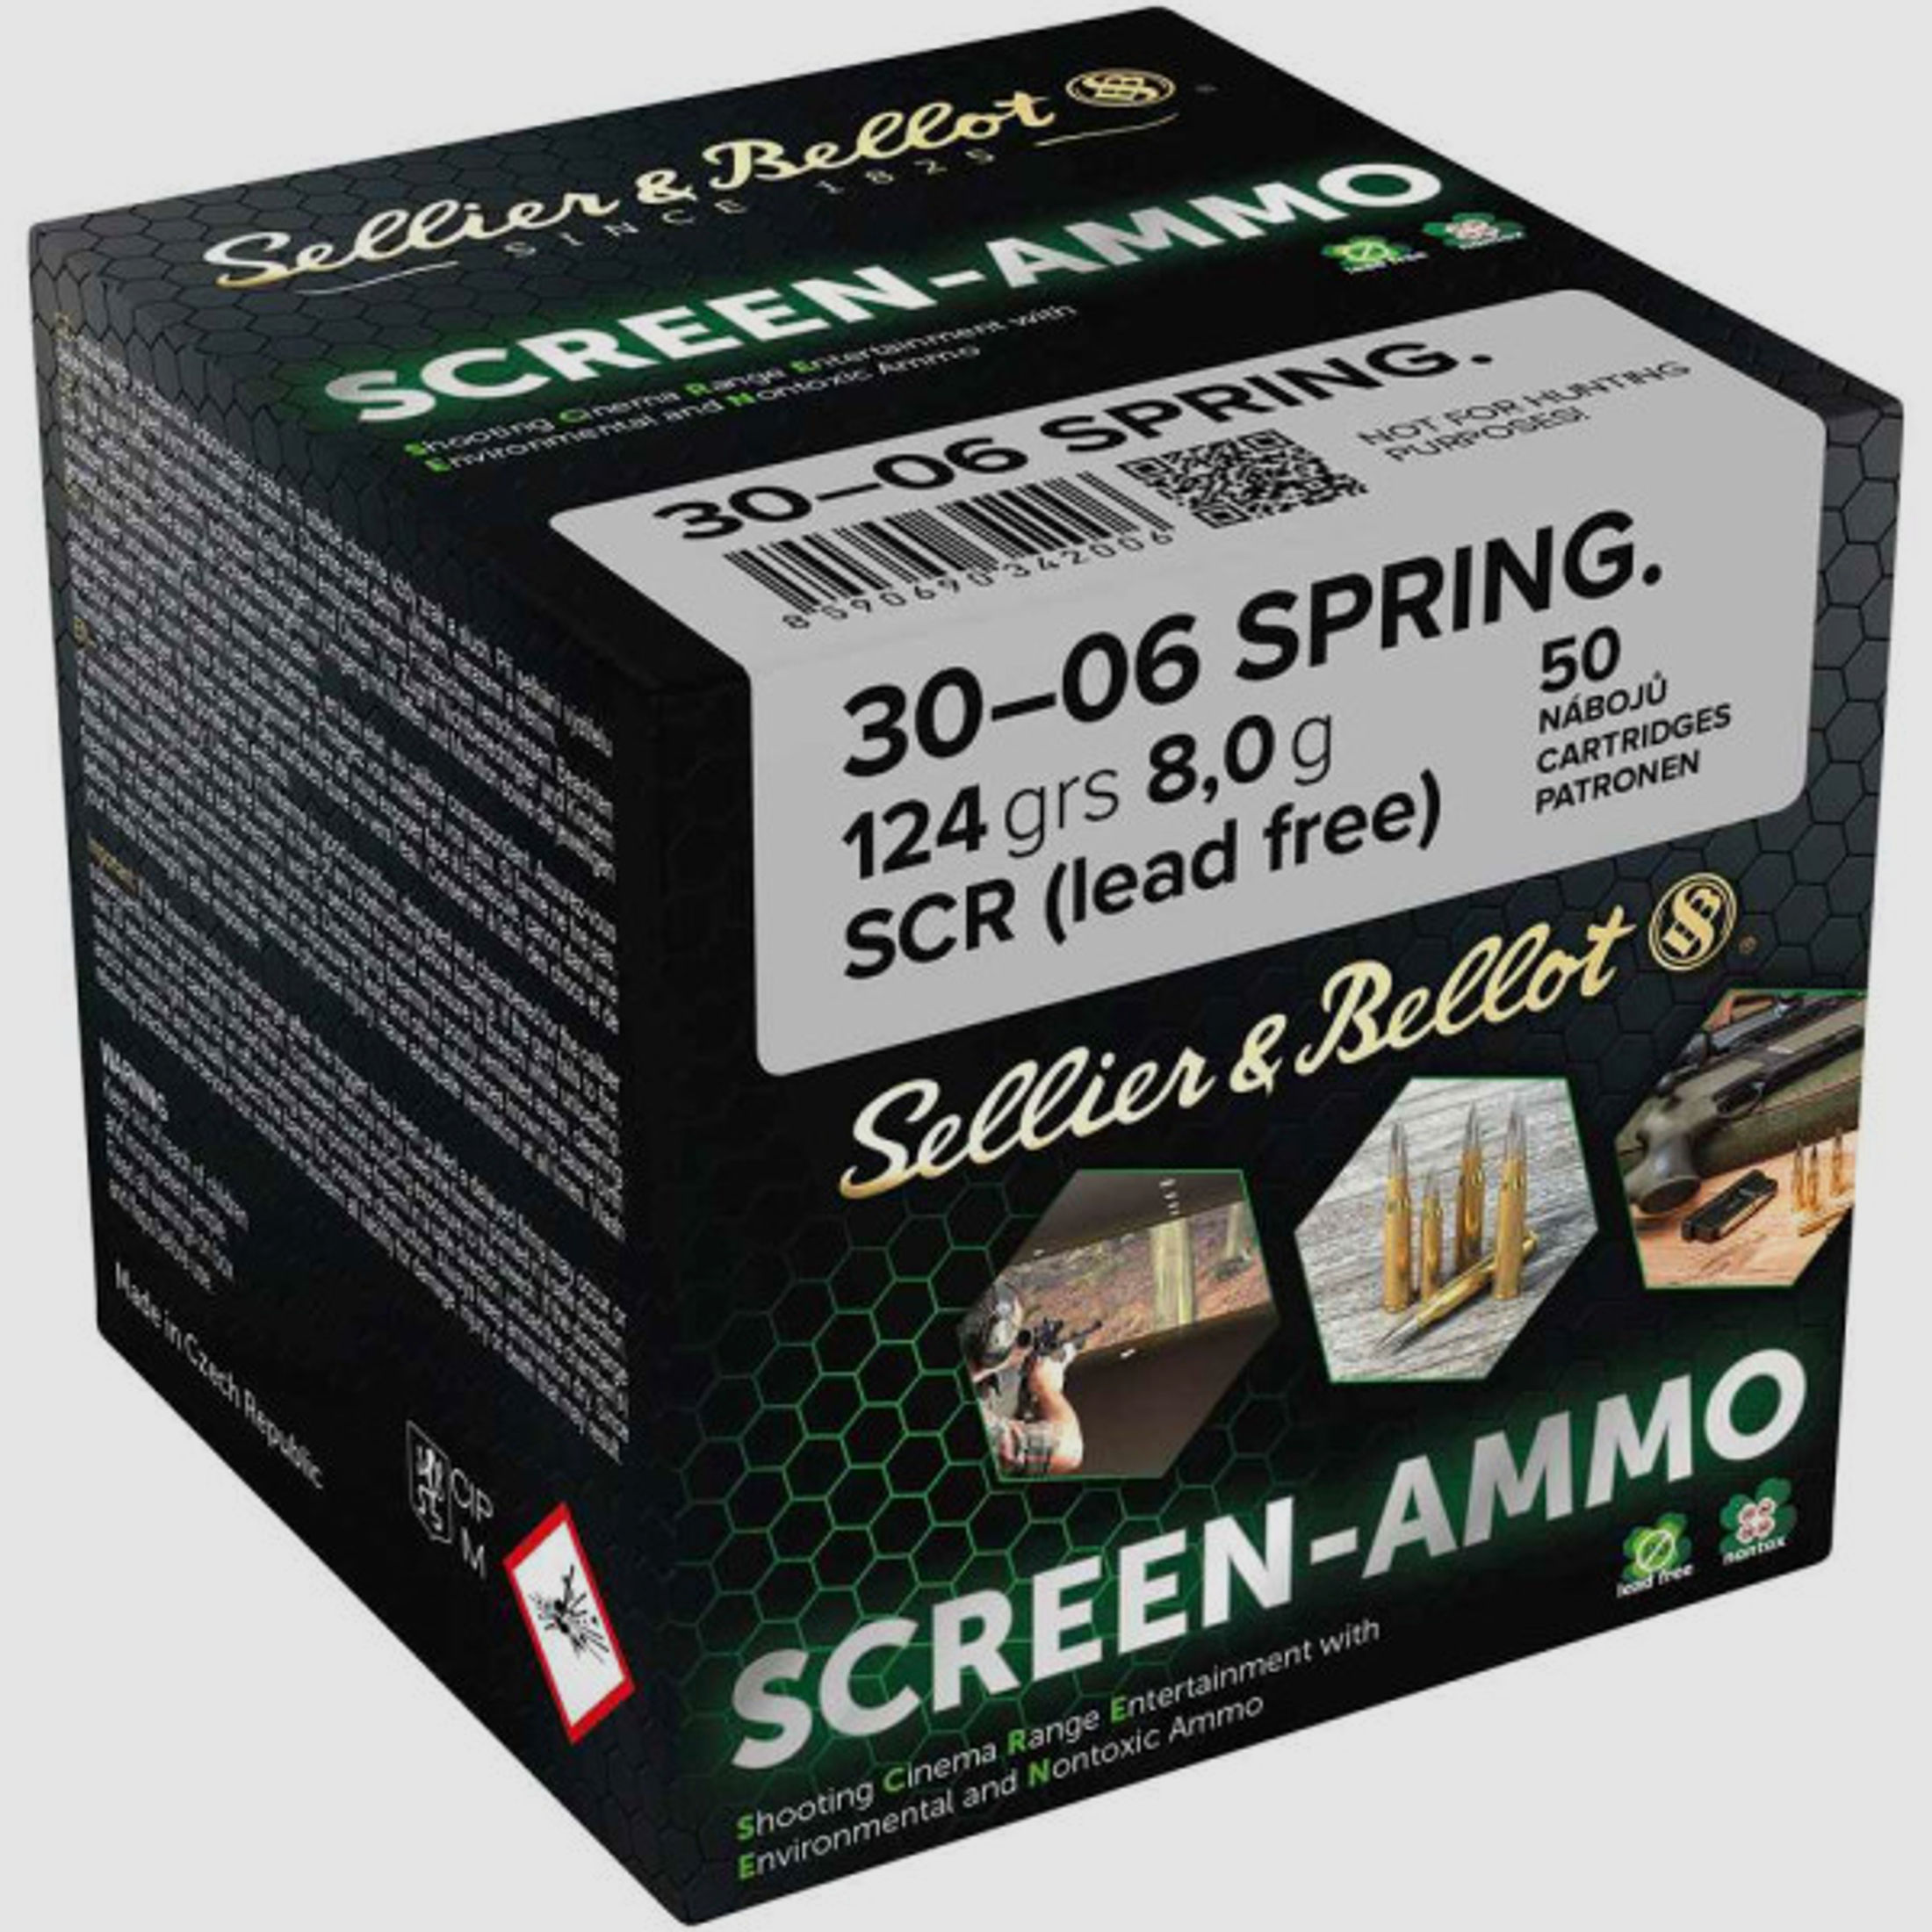 Sellier & Bellot .30-06Spring. 124grs Screen-Ammo 50STK Munition bleifrei